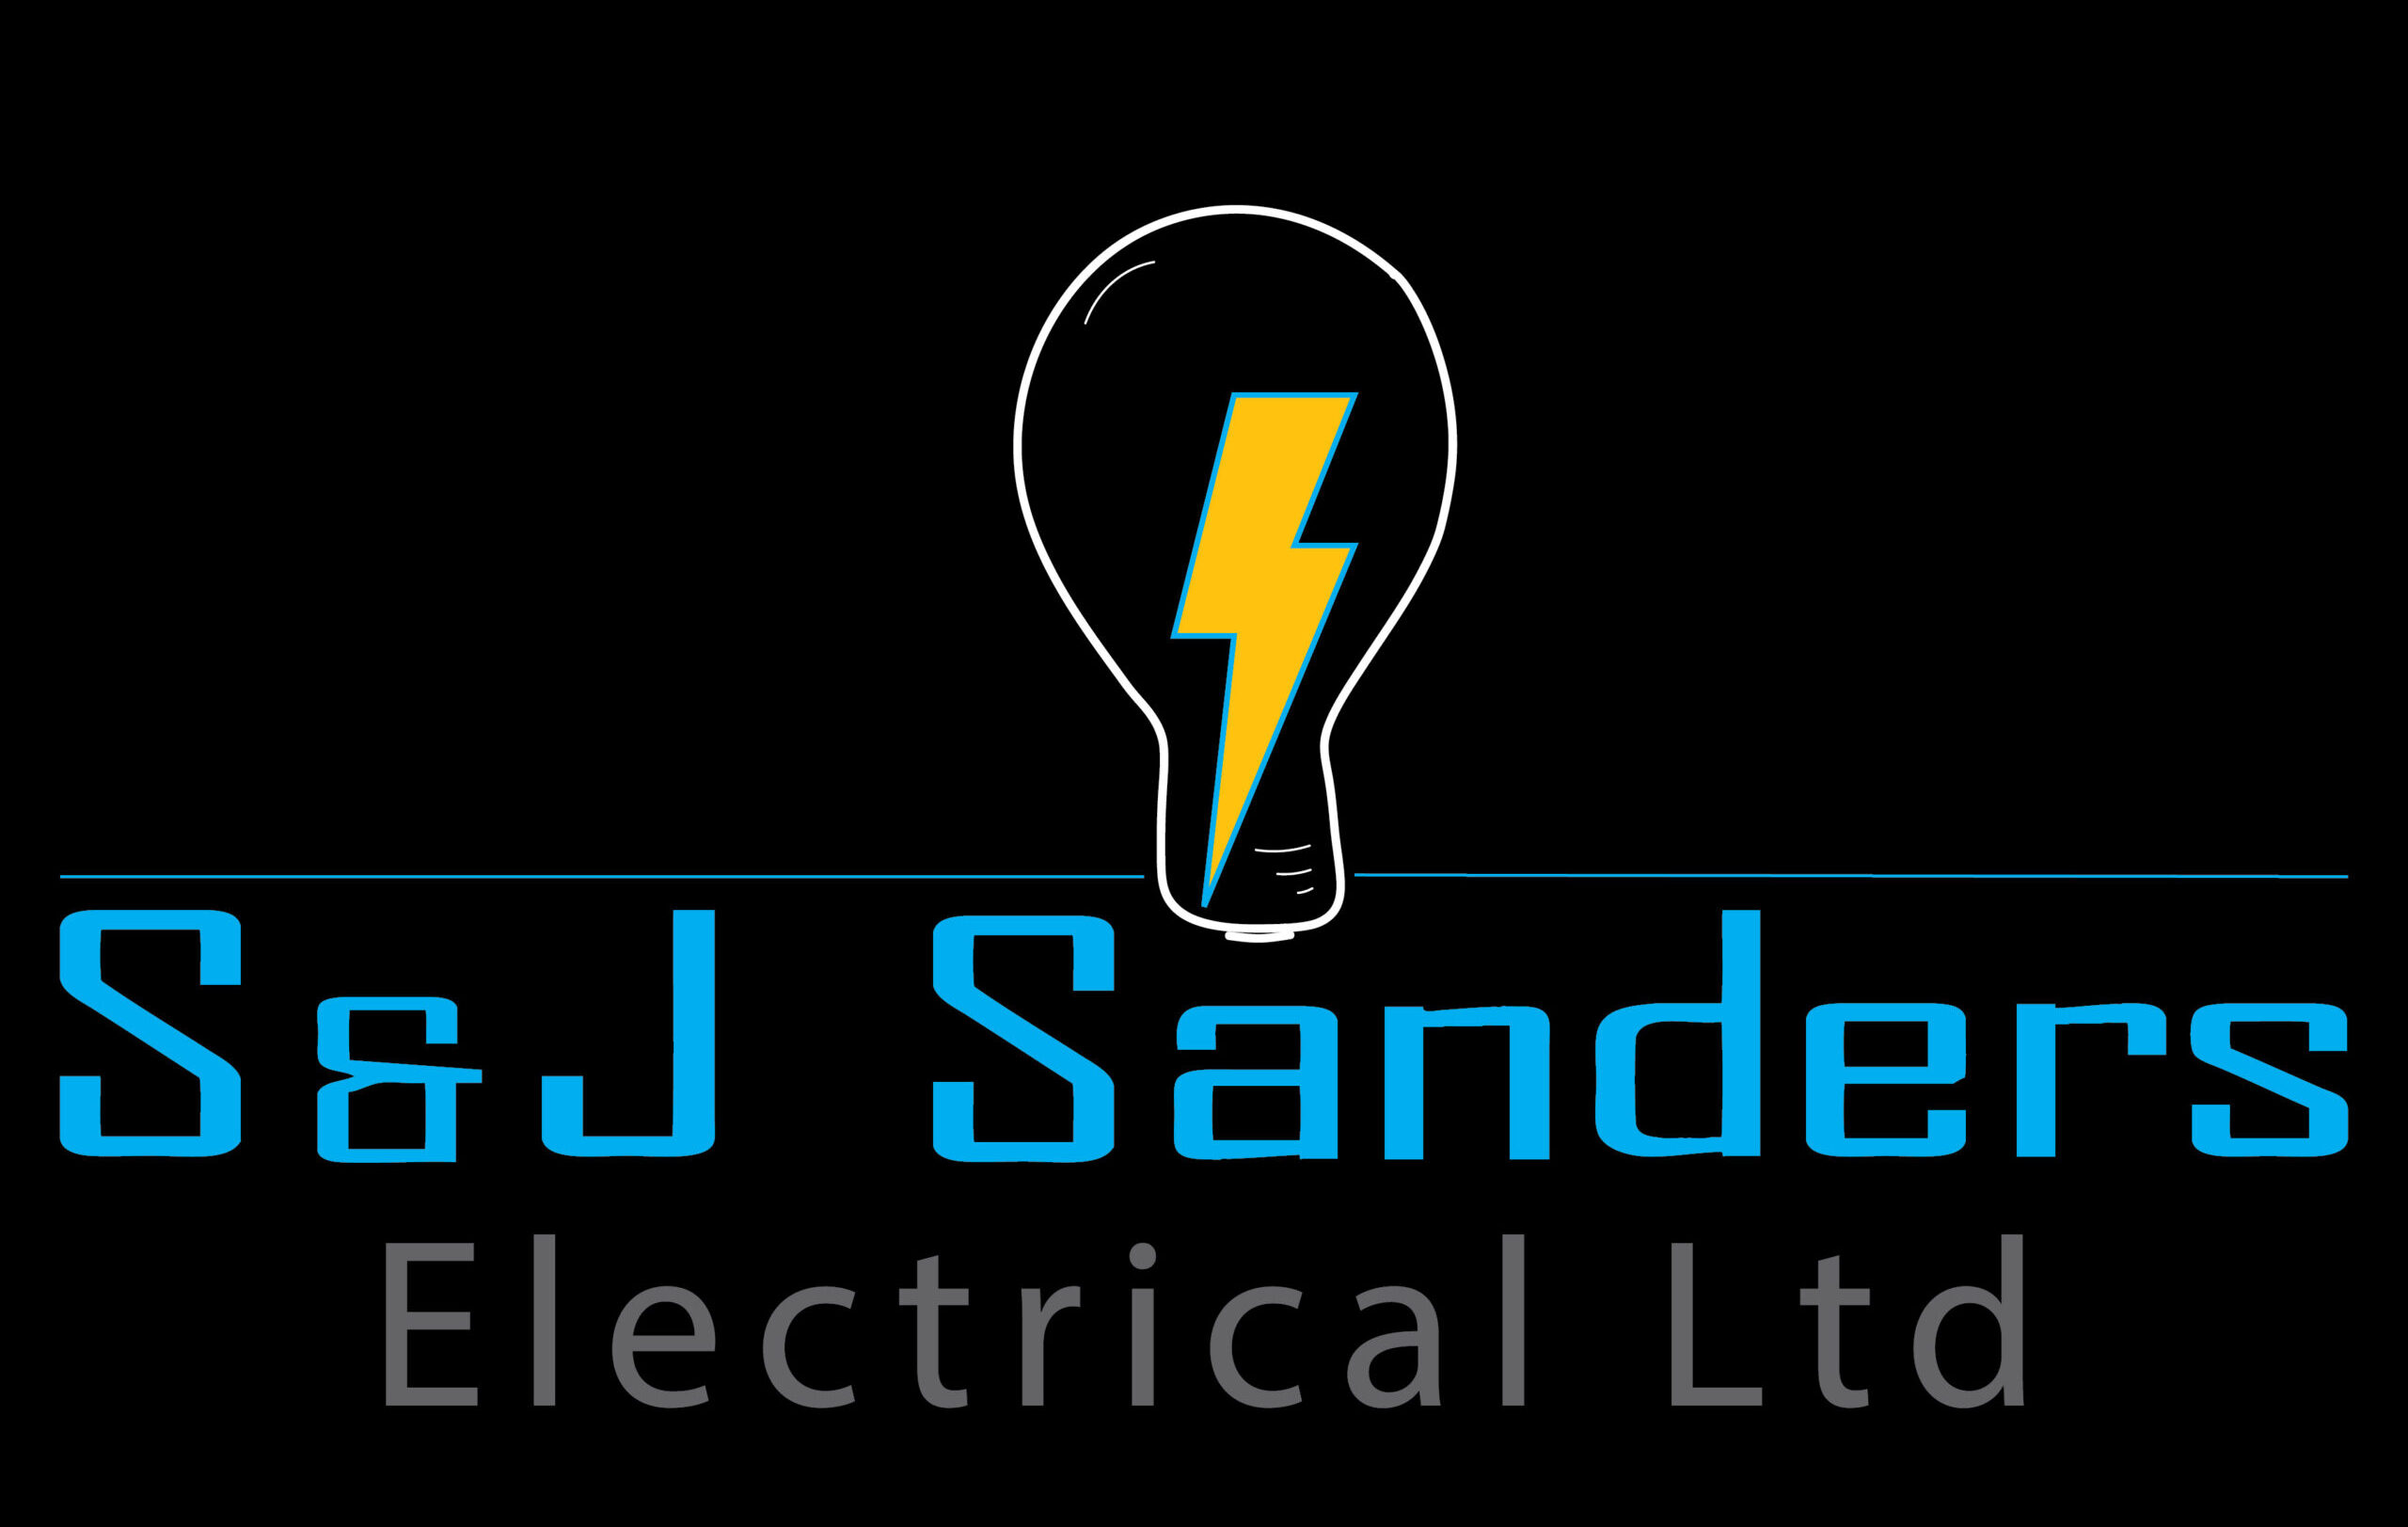 S&J Sanders Electrical Ltd